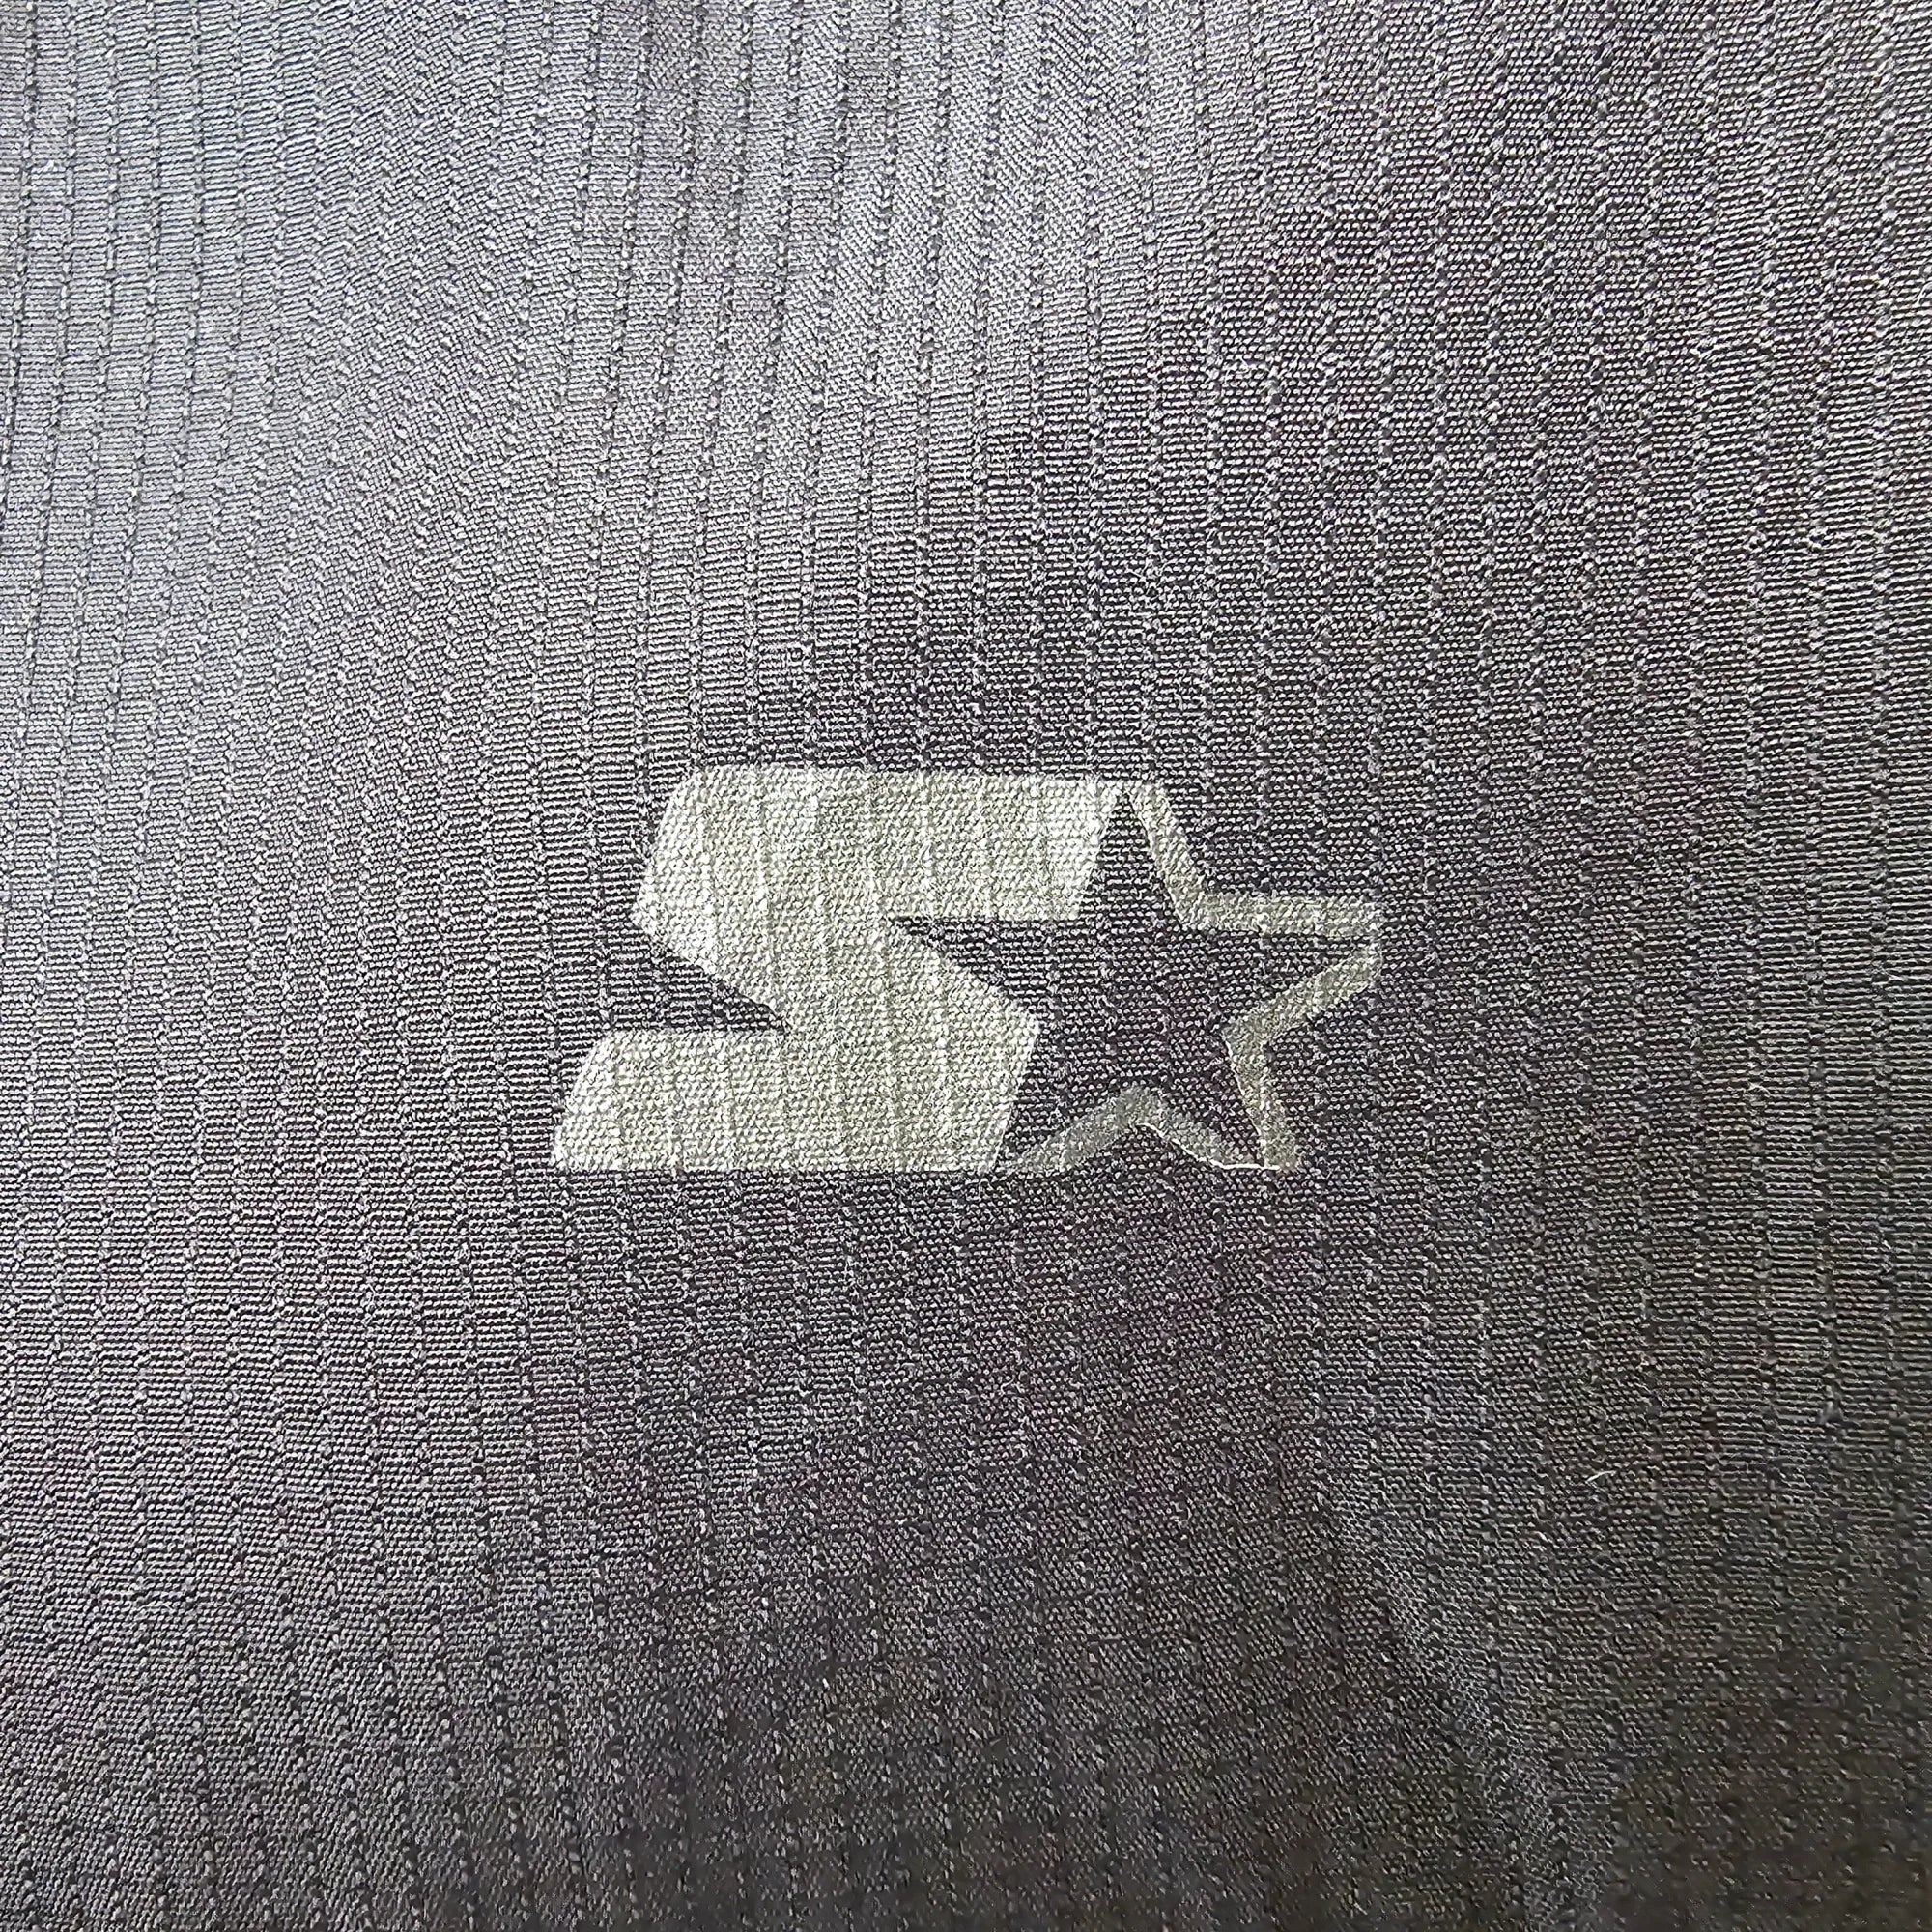 Unisex Starter Black Grey Fleece Jacket UK XL - Coats &